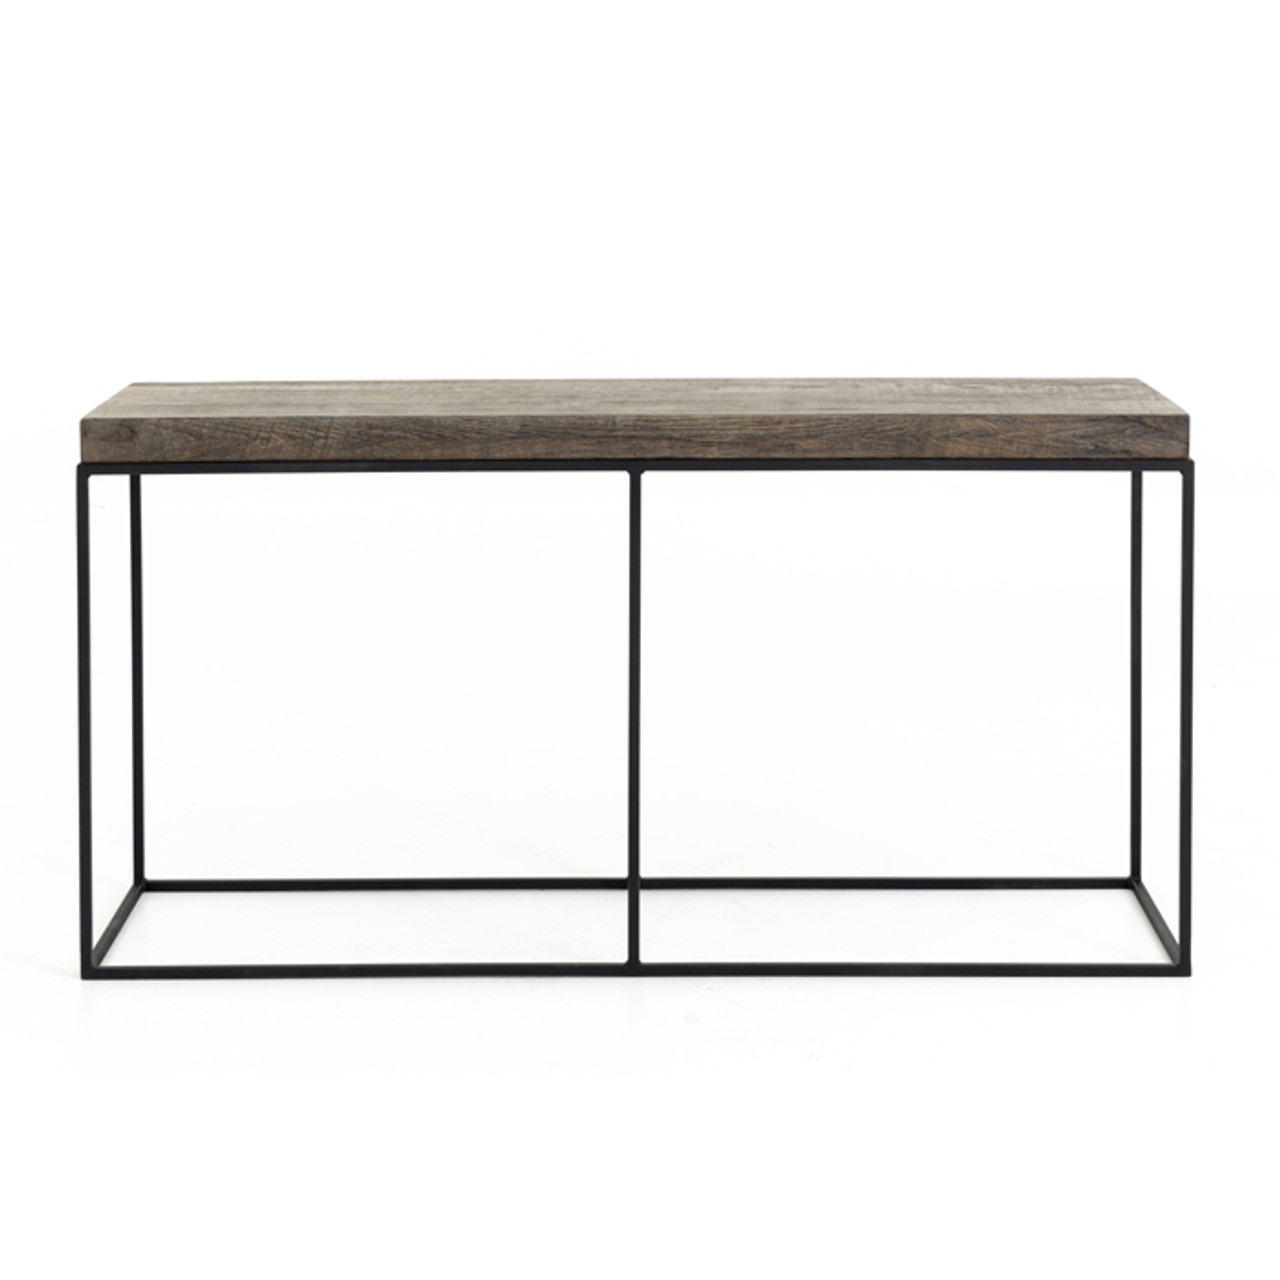 URBAN, console table, oak and metal, dark brown